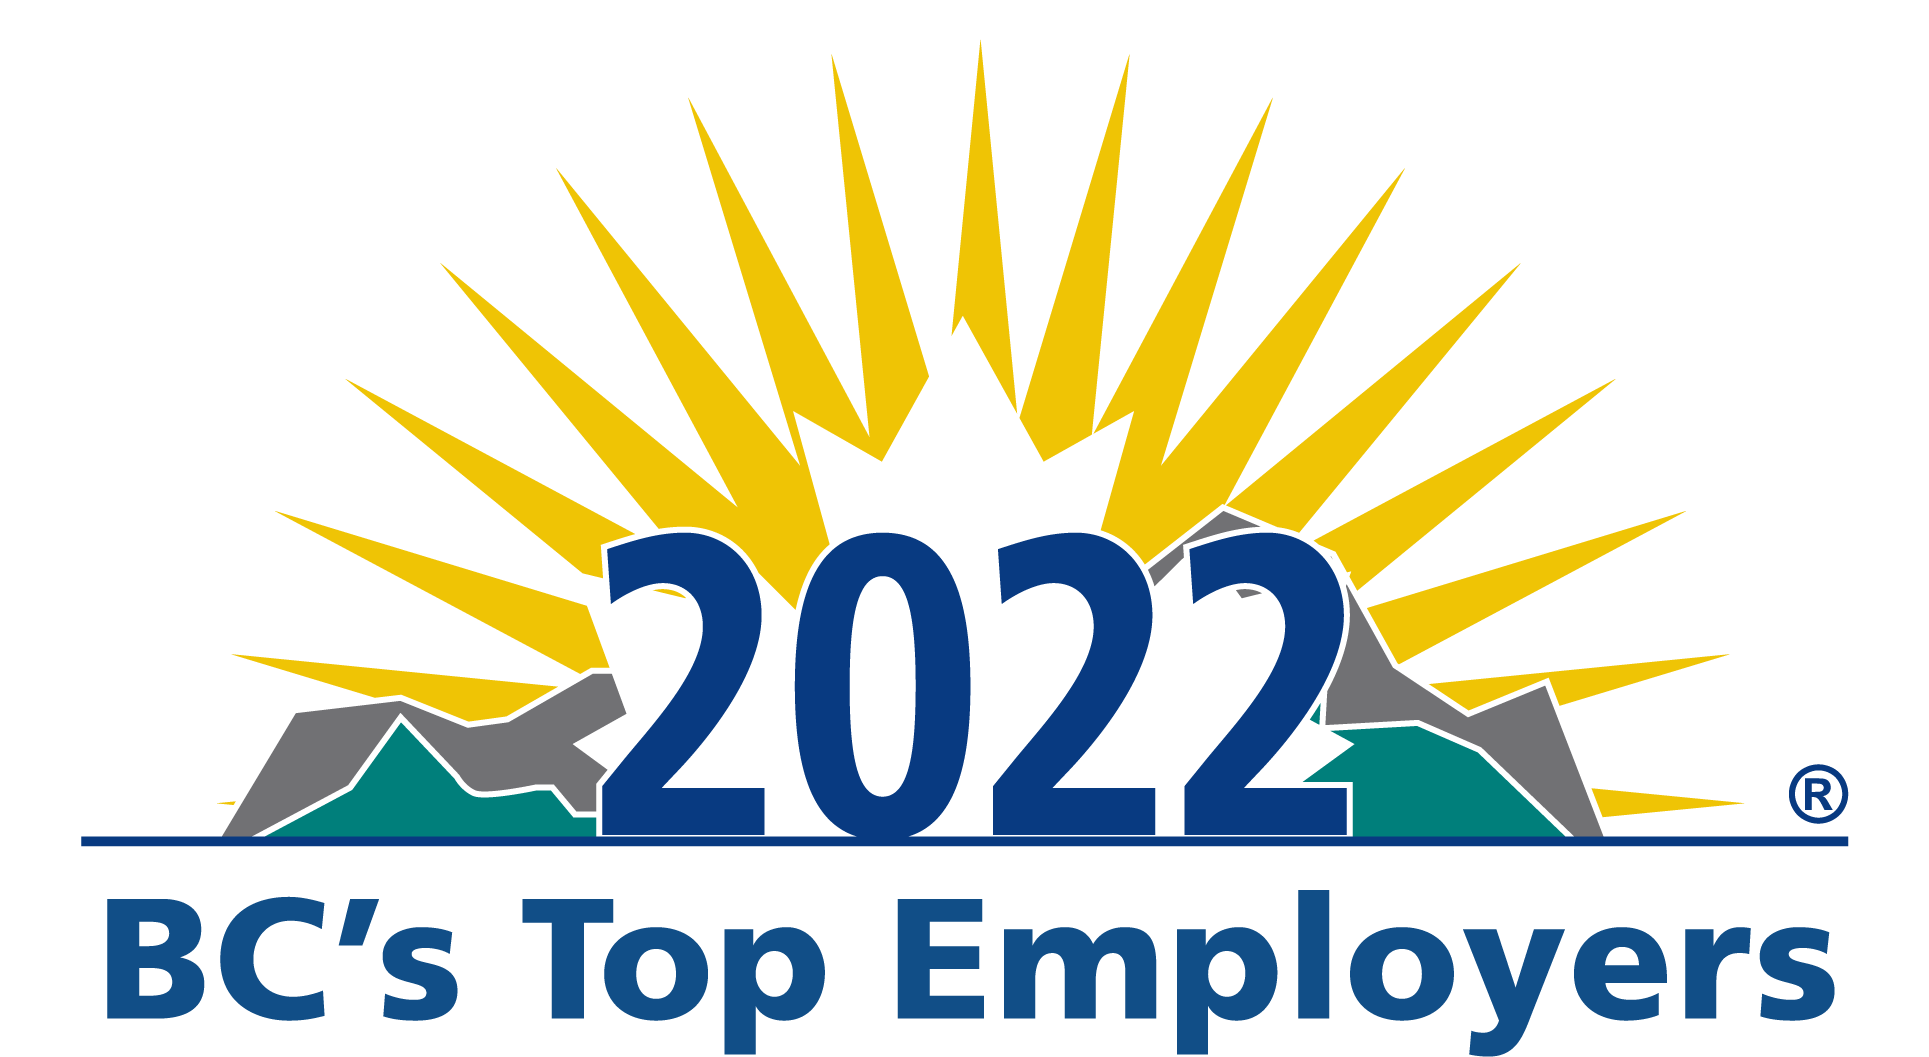 IH BC Top Employer 2022 logo